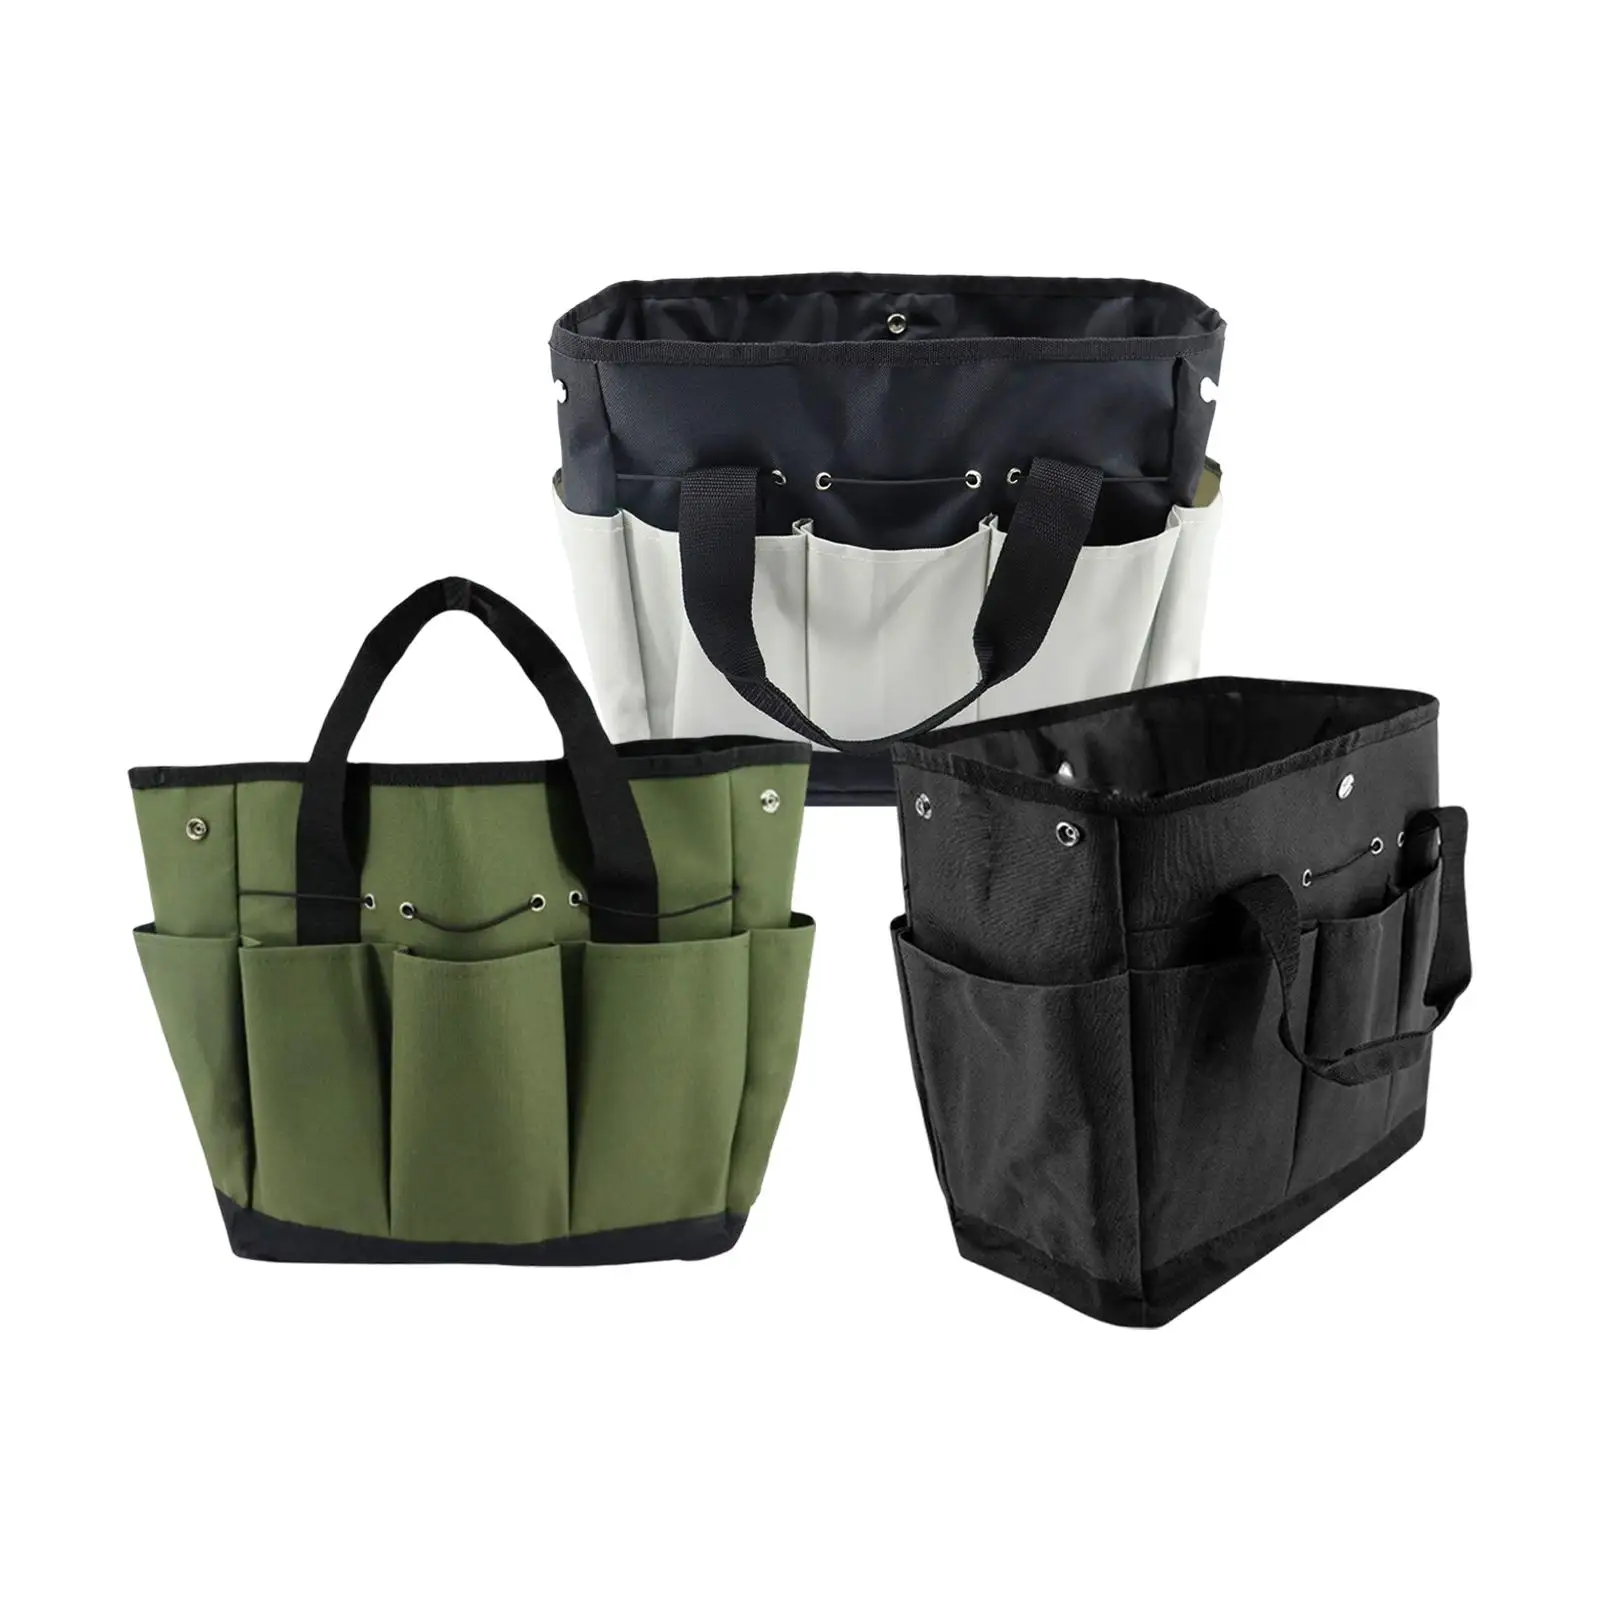 Heavy Duty Gardening Tool Kit Storage Bags Weaving Supplies Home Organizer Garden Tote Storage Bag for Holding Gardening Kit